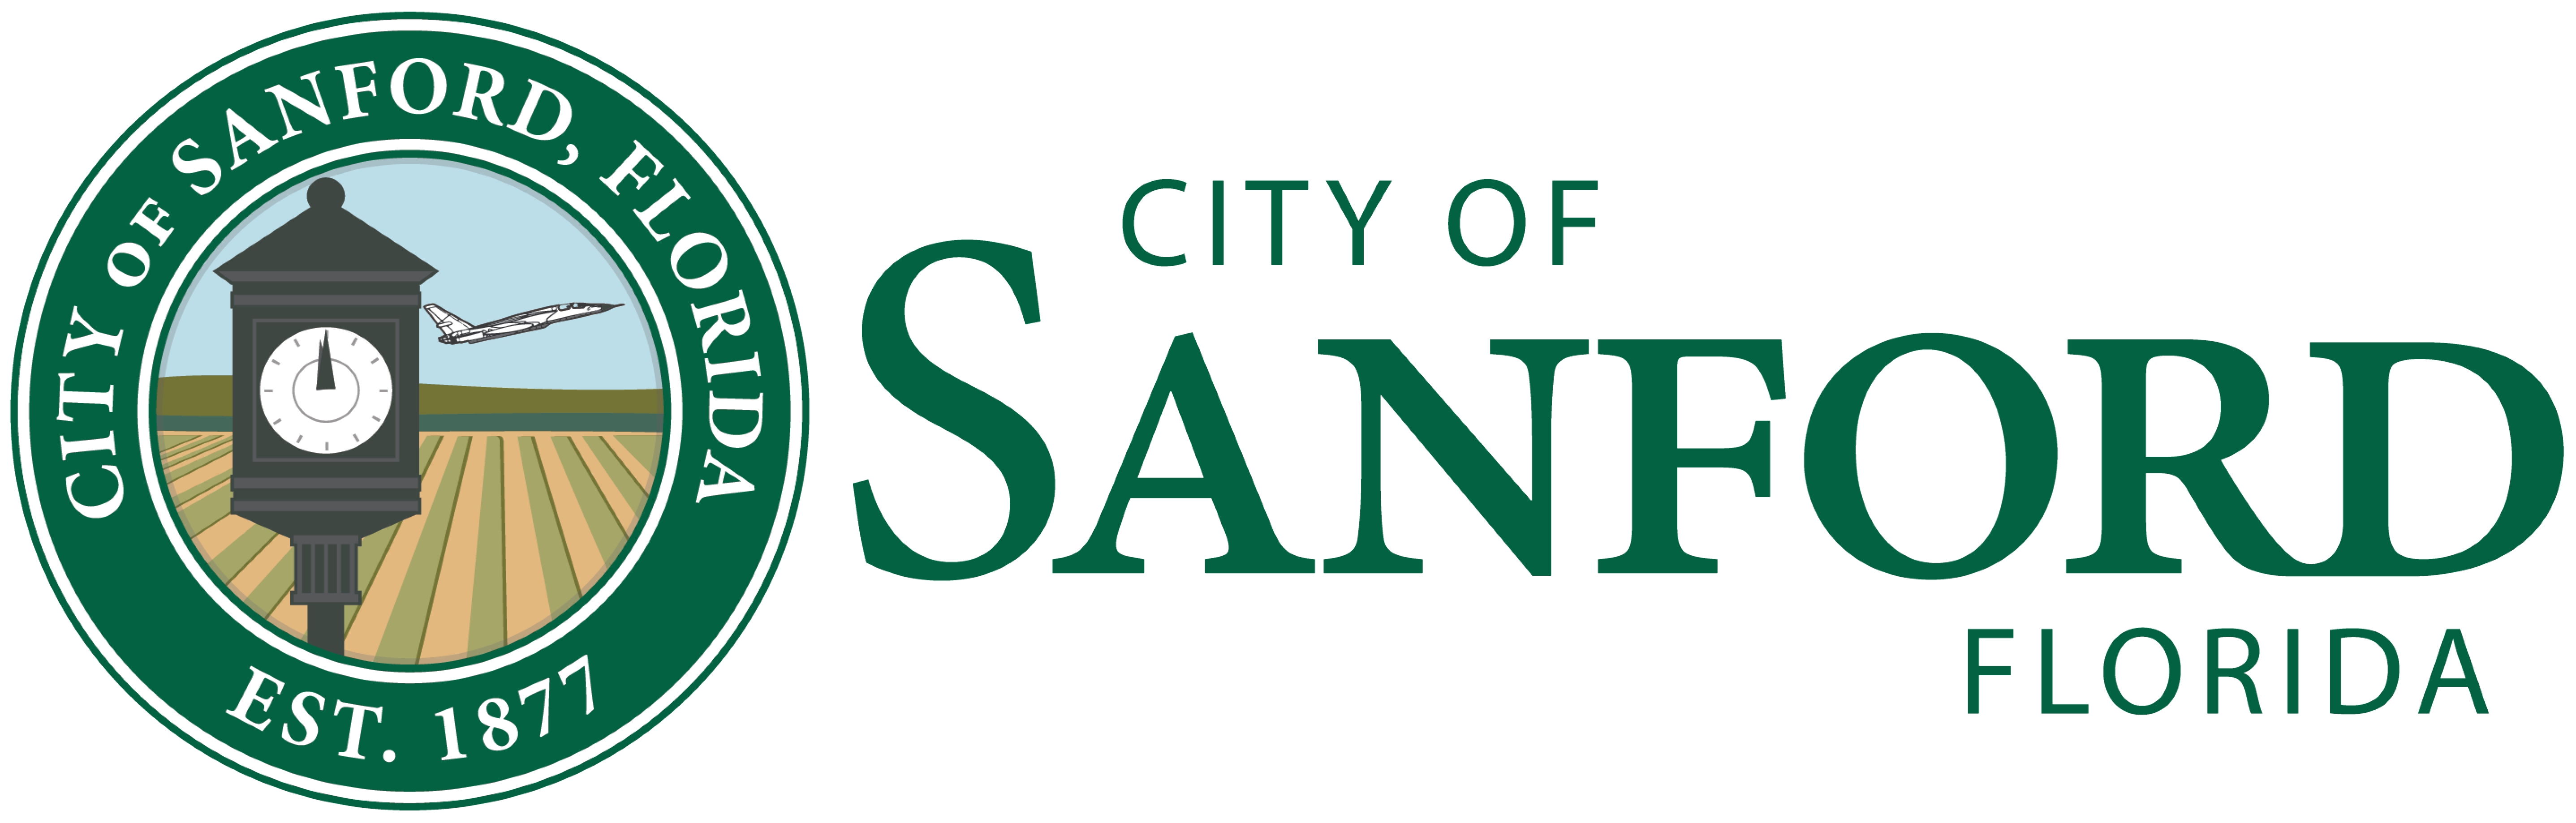 City of Sanford logo